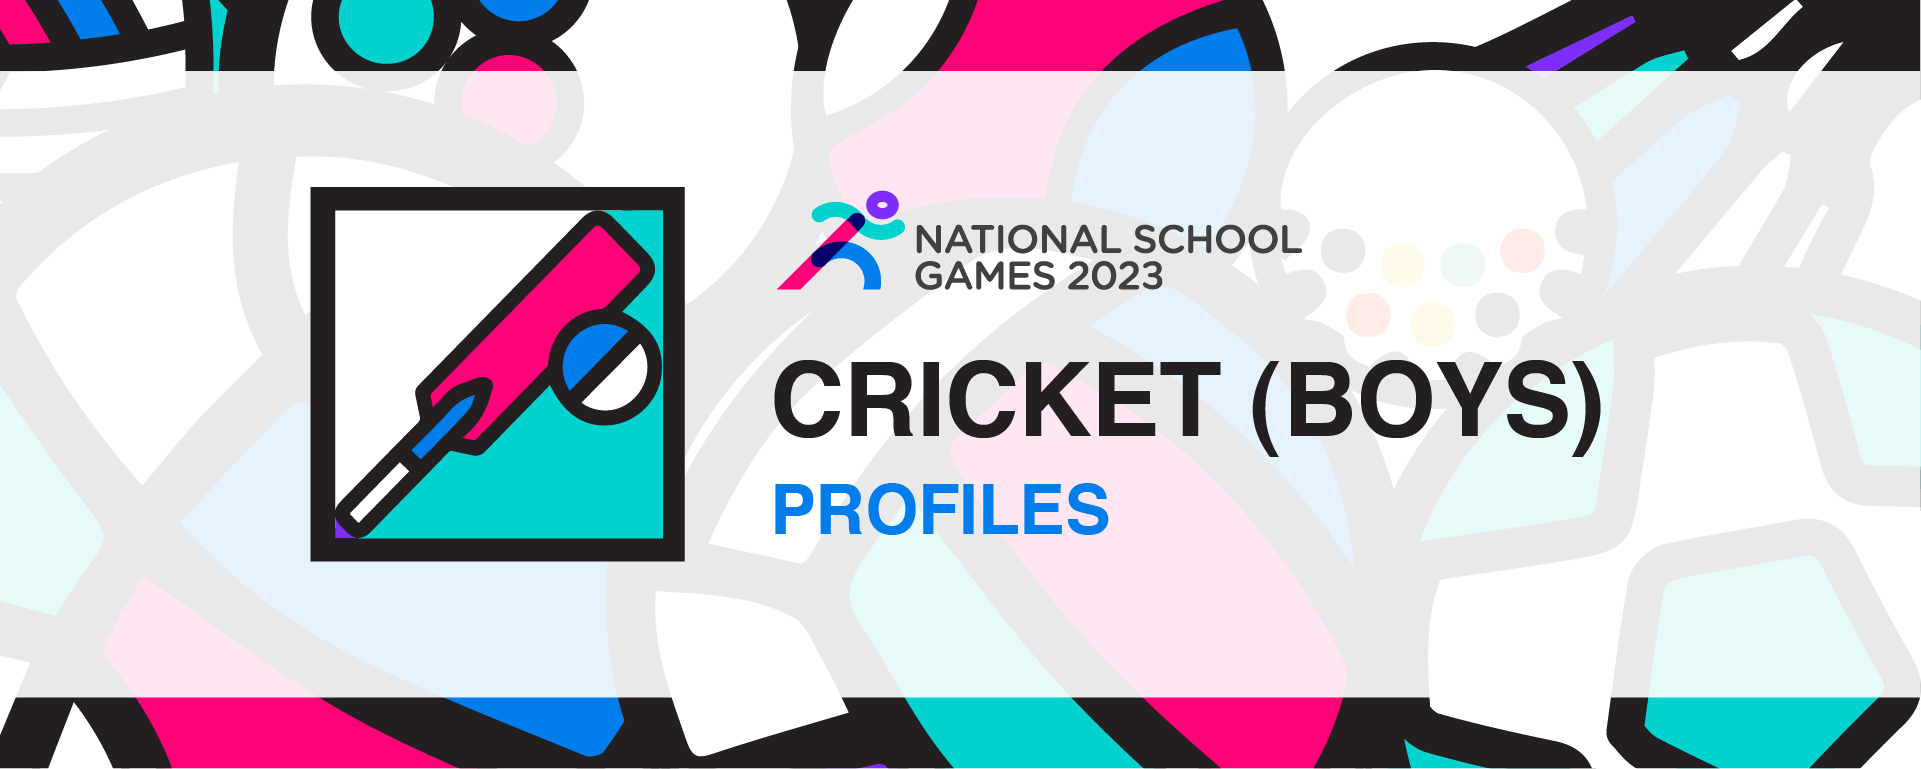 National School Games 2023 | Cricket | Profiles